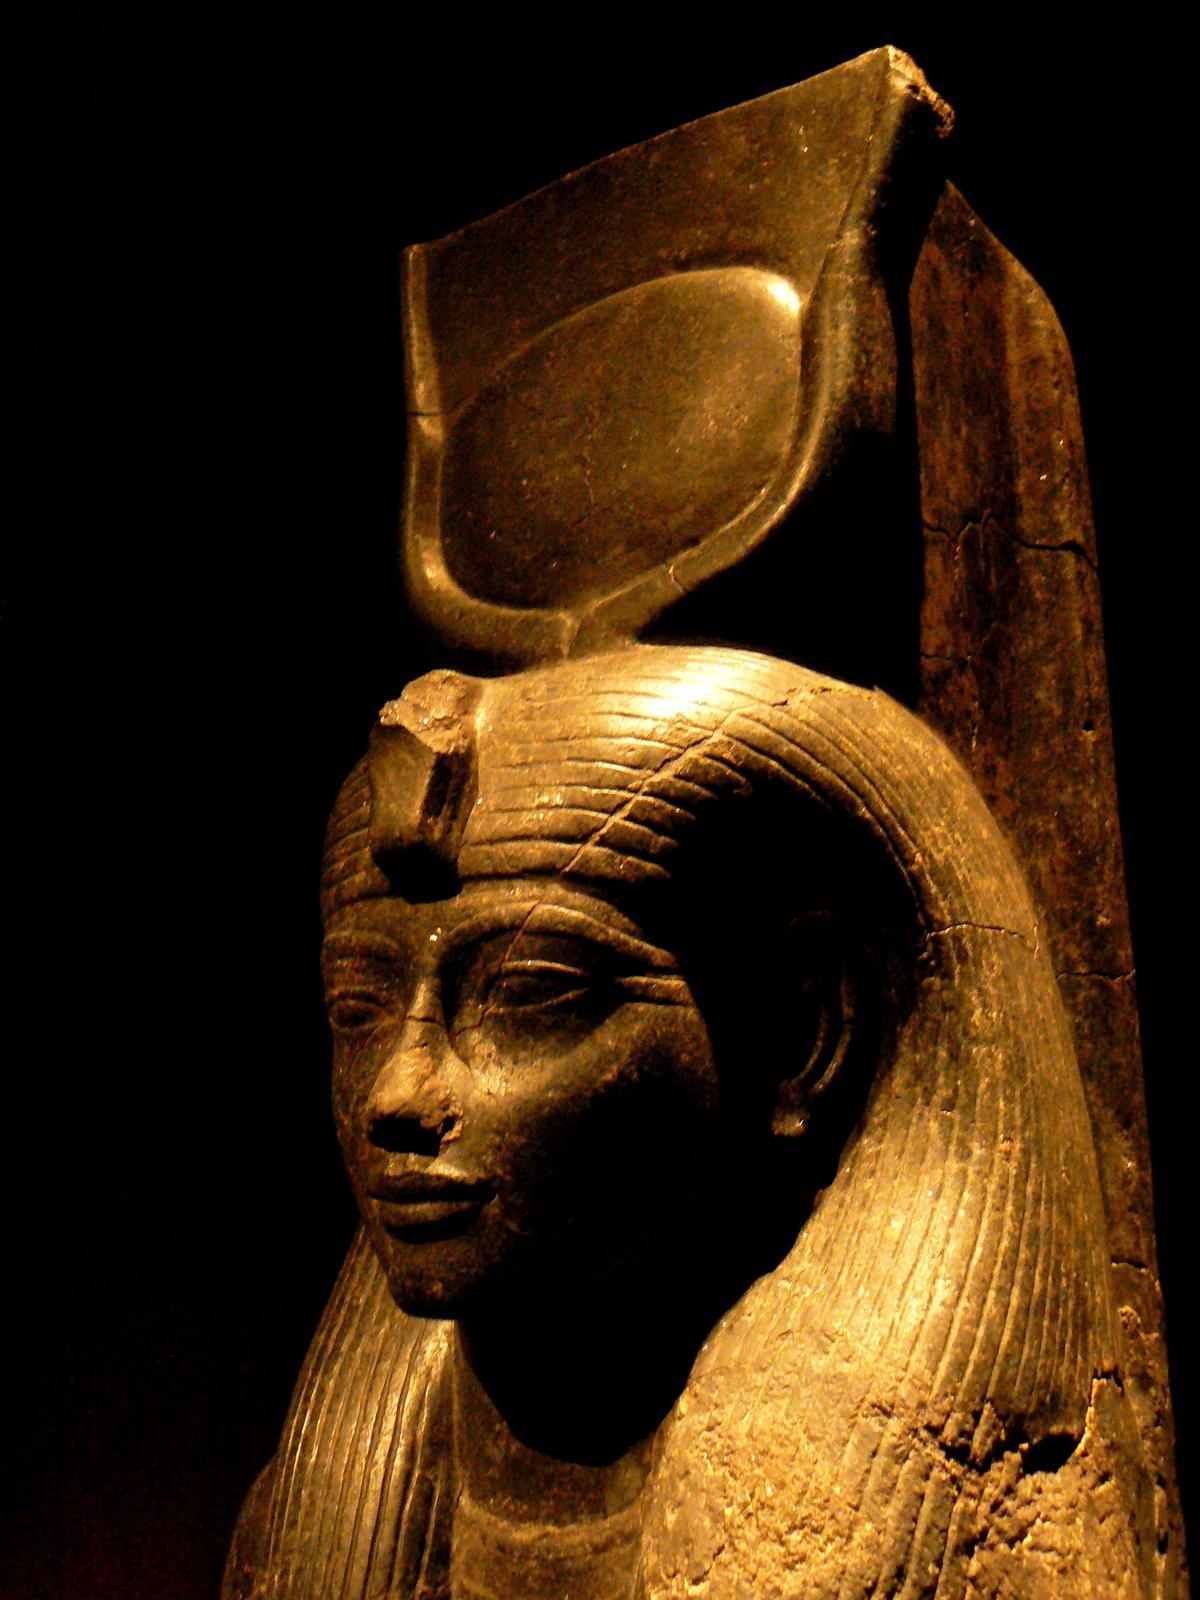 a golden piece of a sculpture that resembles the head of an egyptian queen